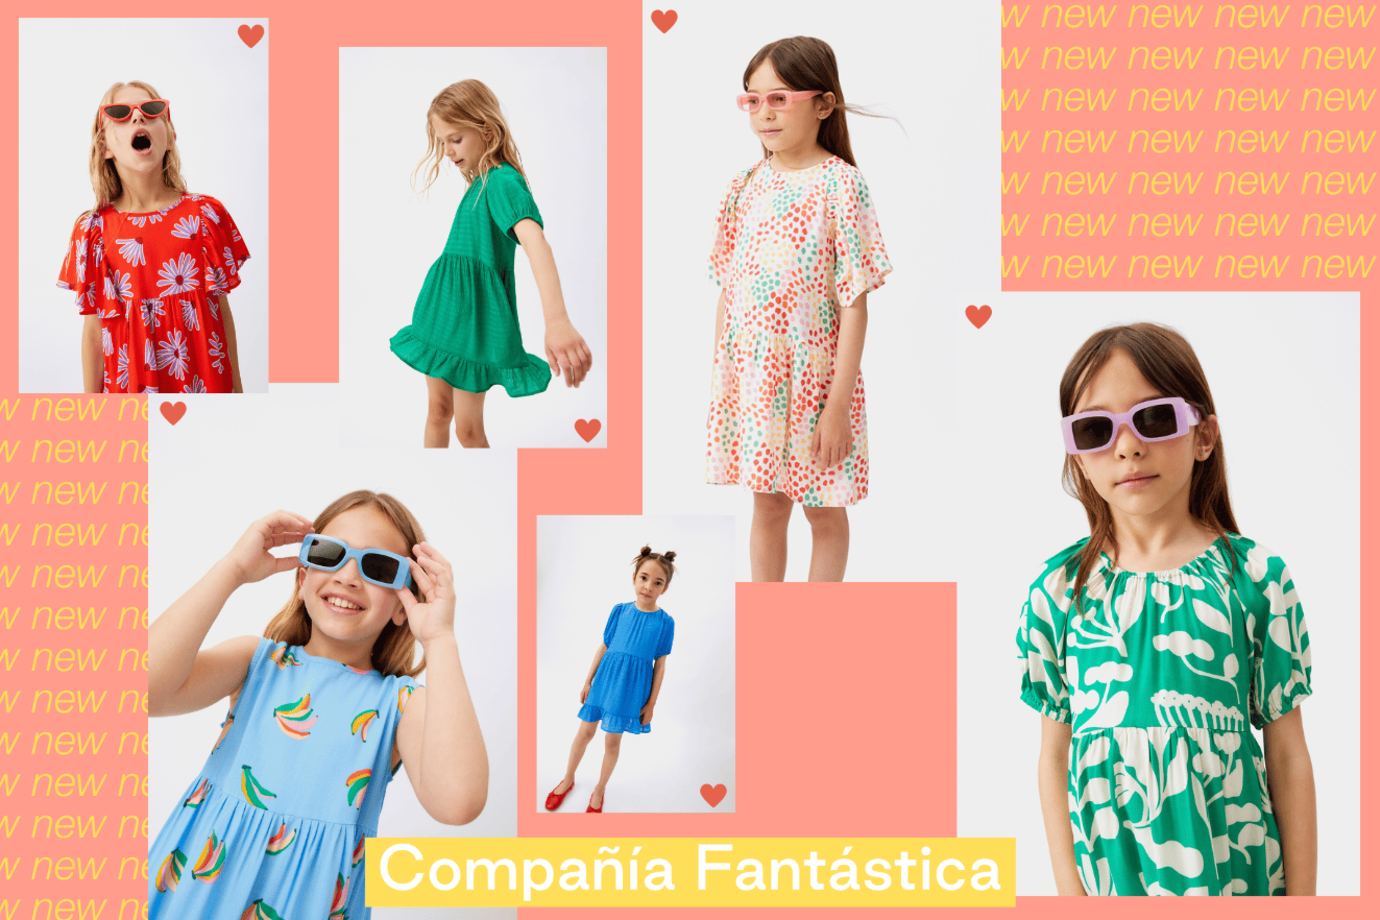 banner_CompaniaFantastica_Z24.png